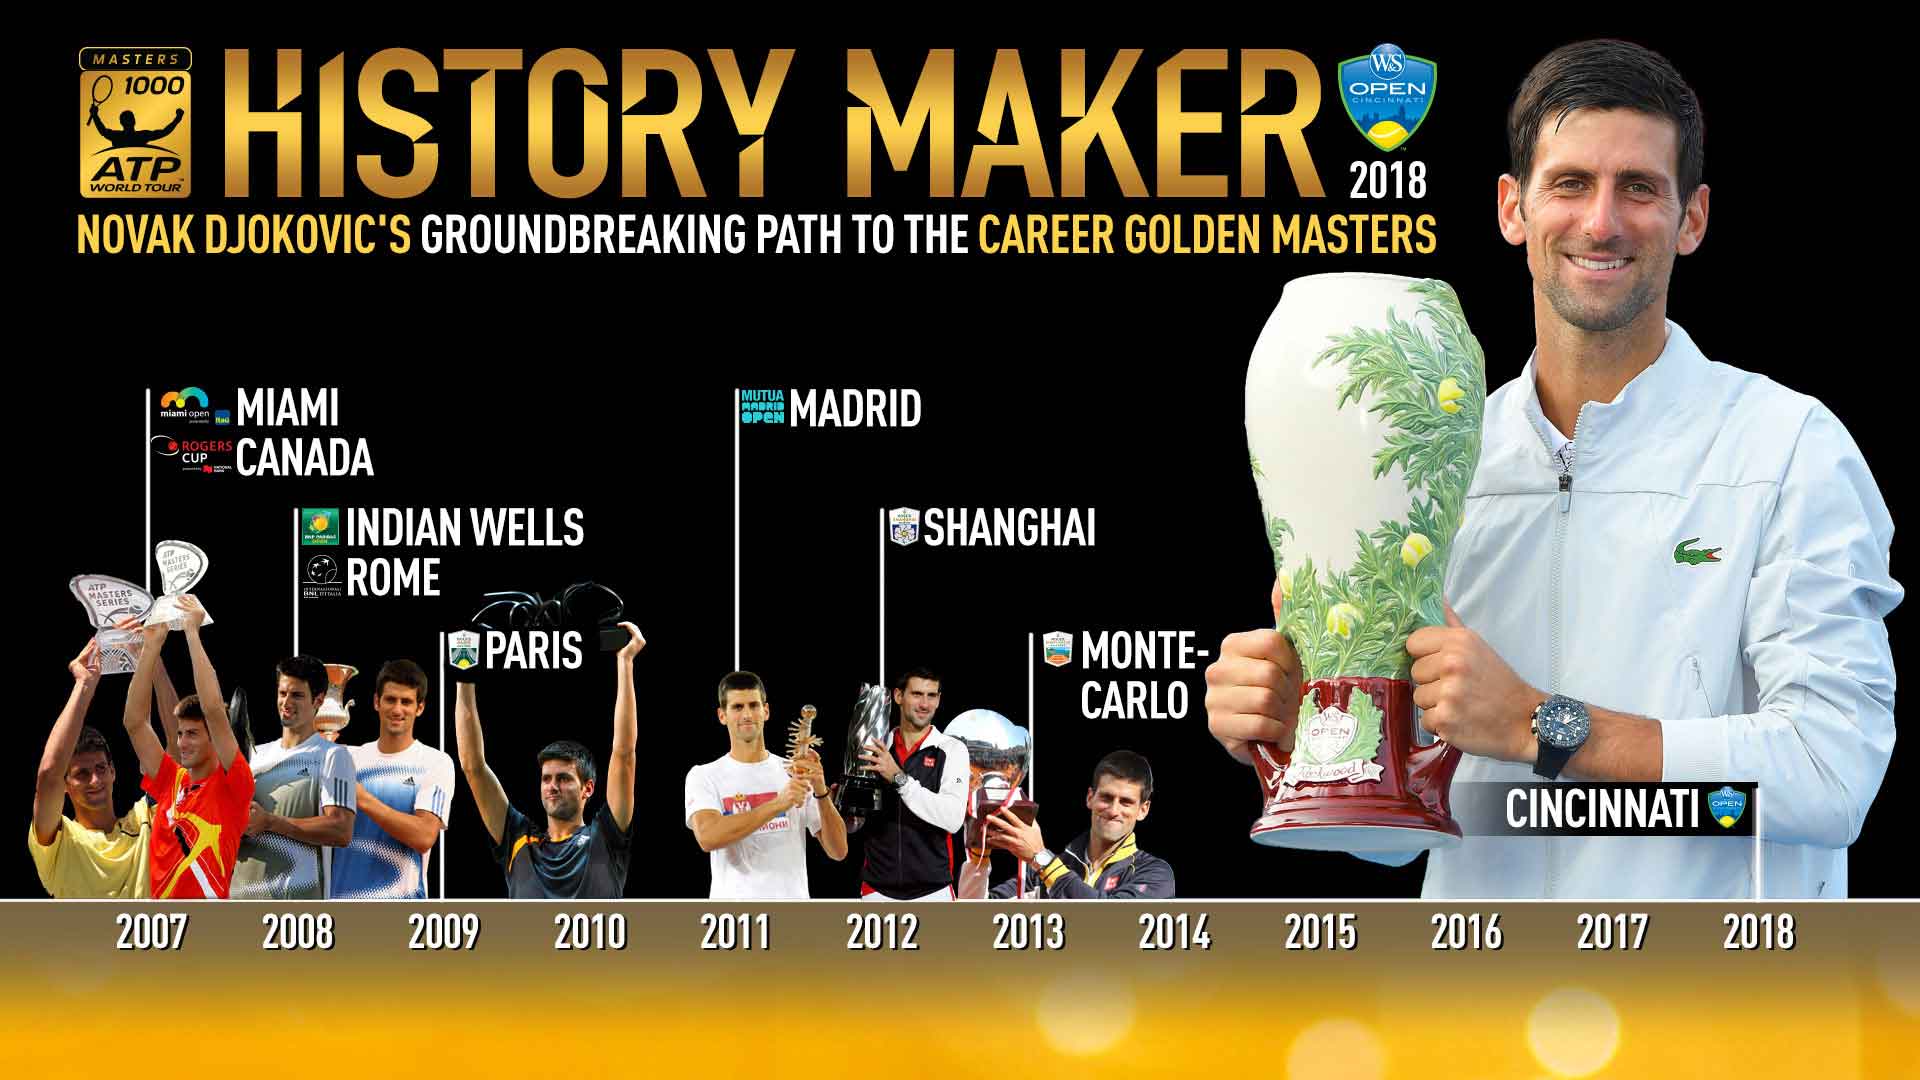 Novak Djokovic lifts his first trophy in Cincinnati, completing the Career Golden Masters.